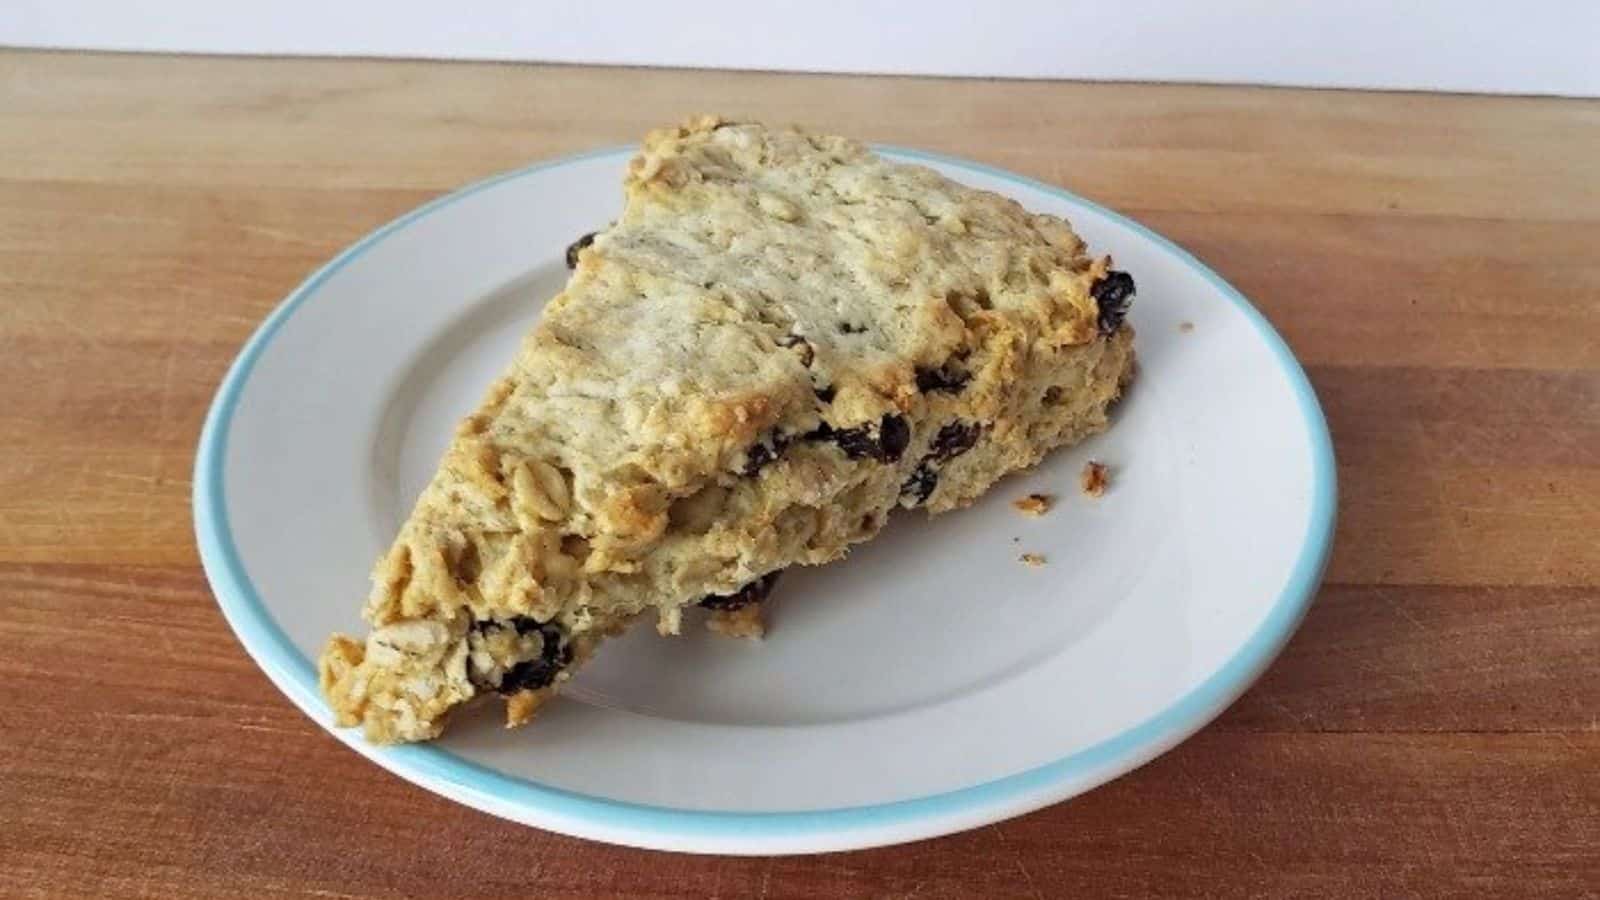 Image shows a buttermilk raisin scone on a plate.